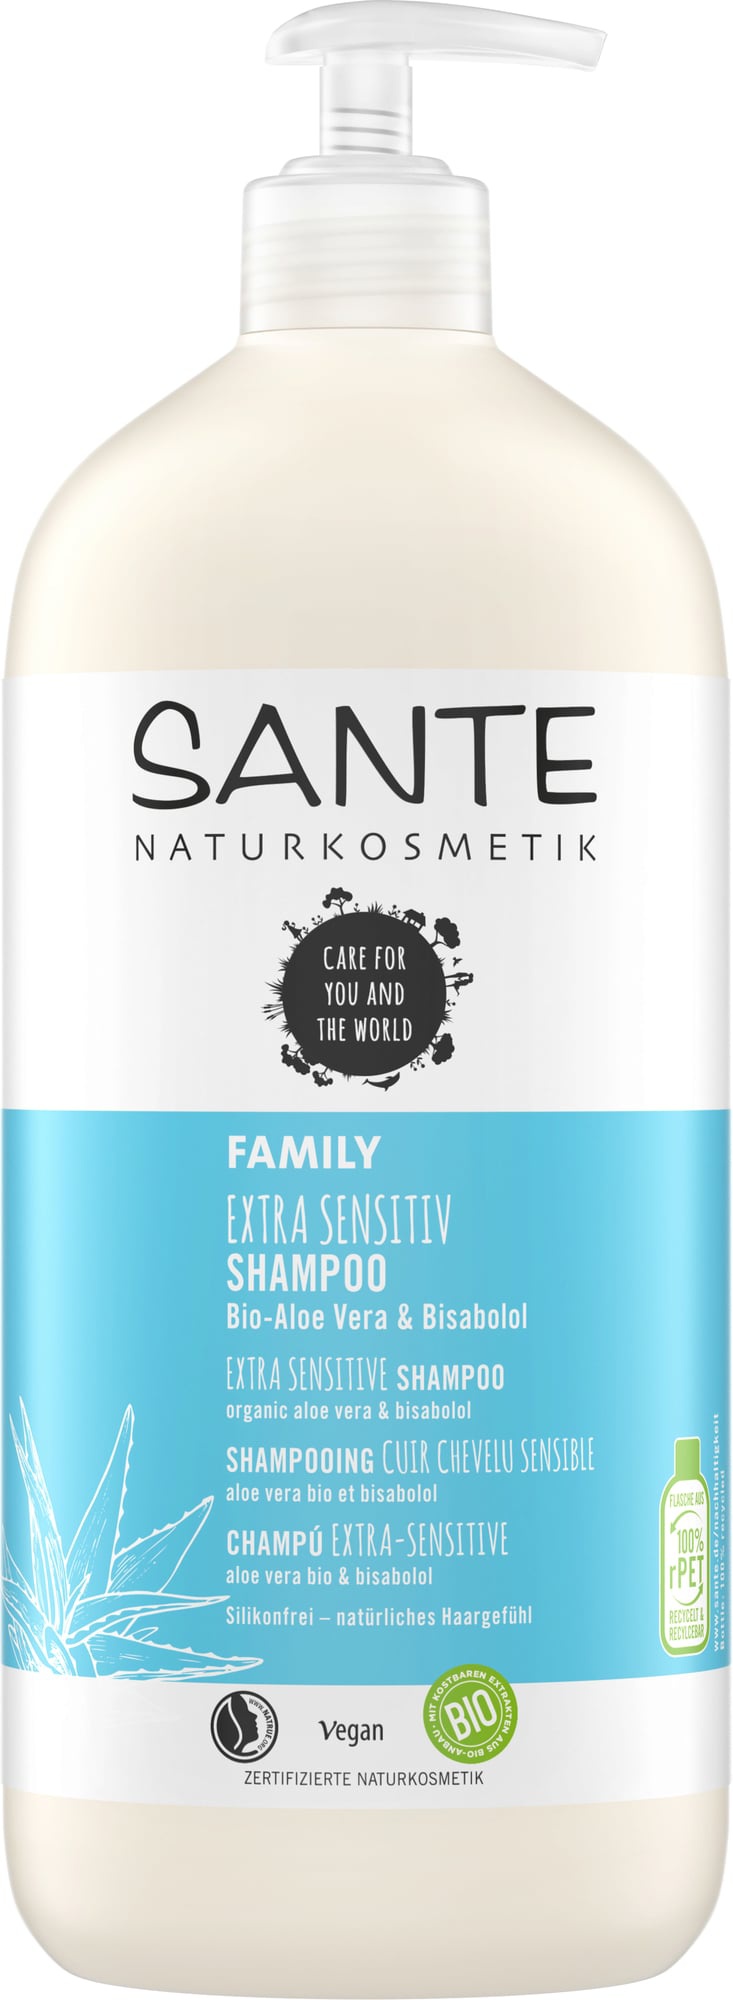 Sante Naturkosmetik Extra Sensitive Shampoo Aloe Vera & Bisabolol